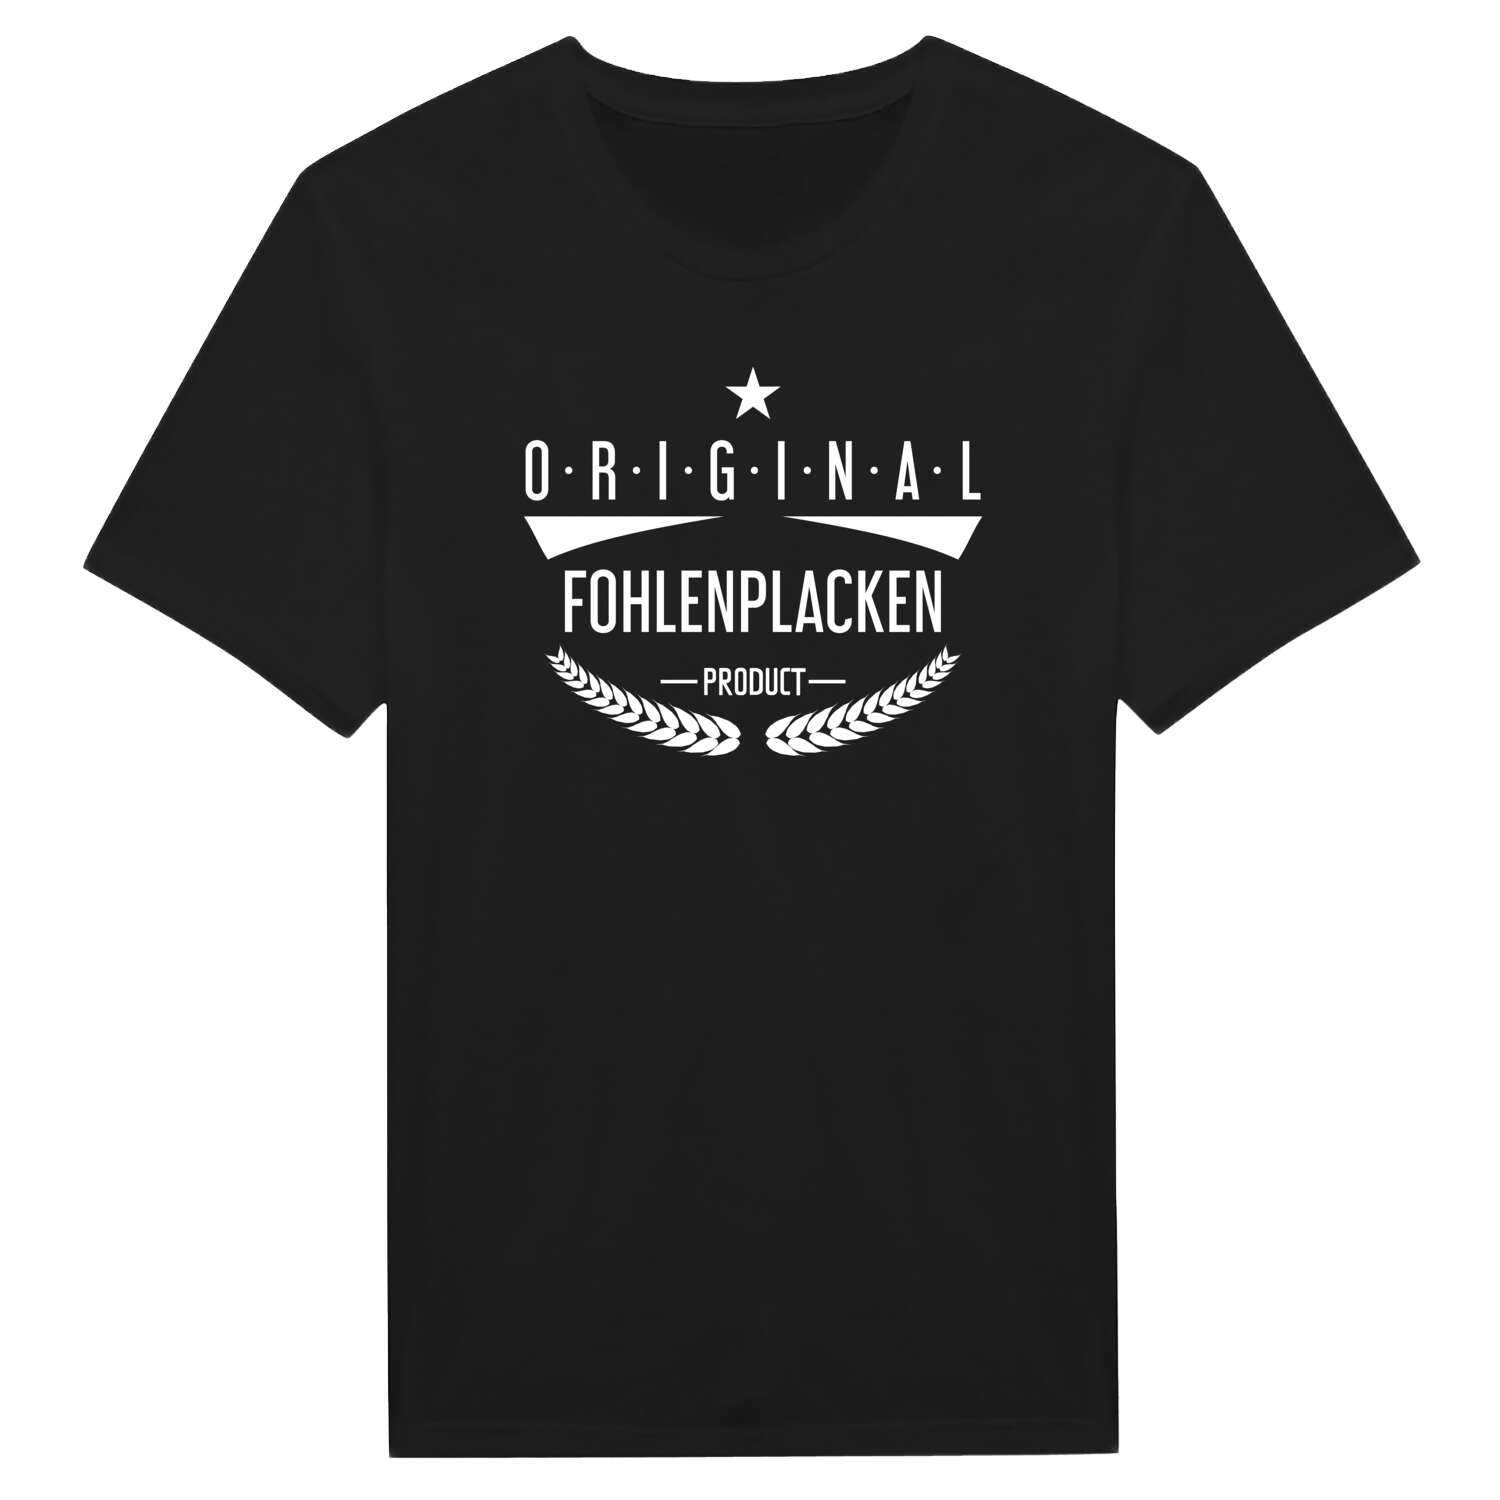 Fohlenplacken T-Shirt »Original Product«